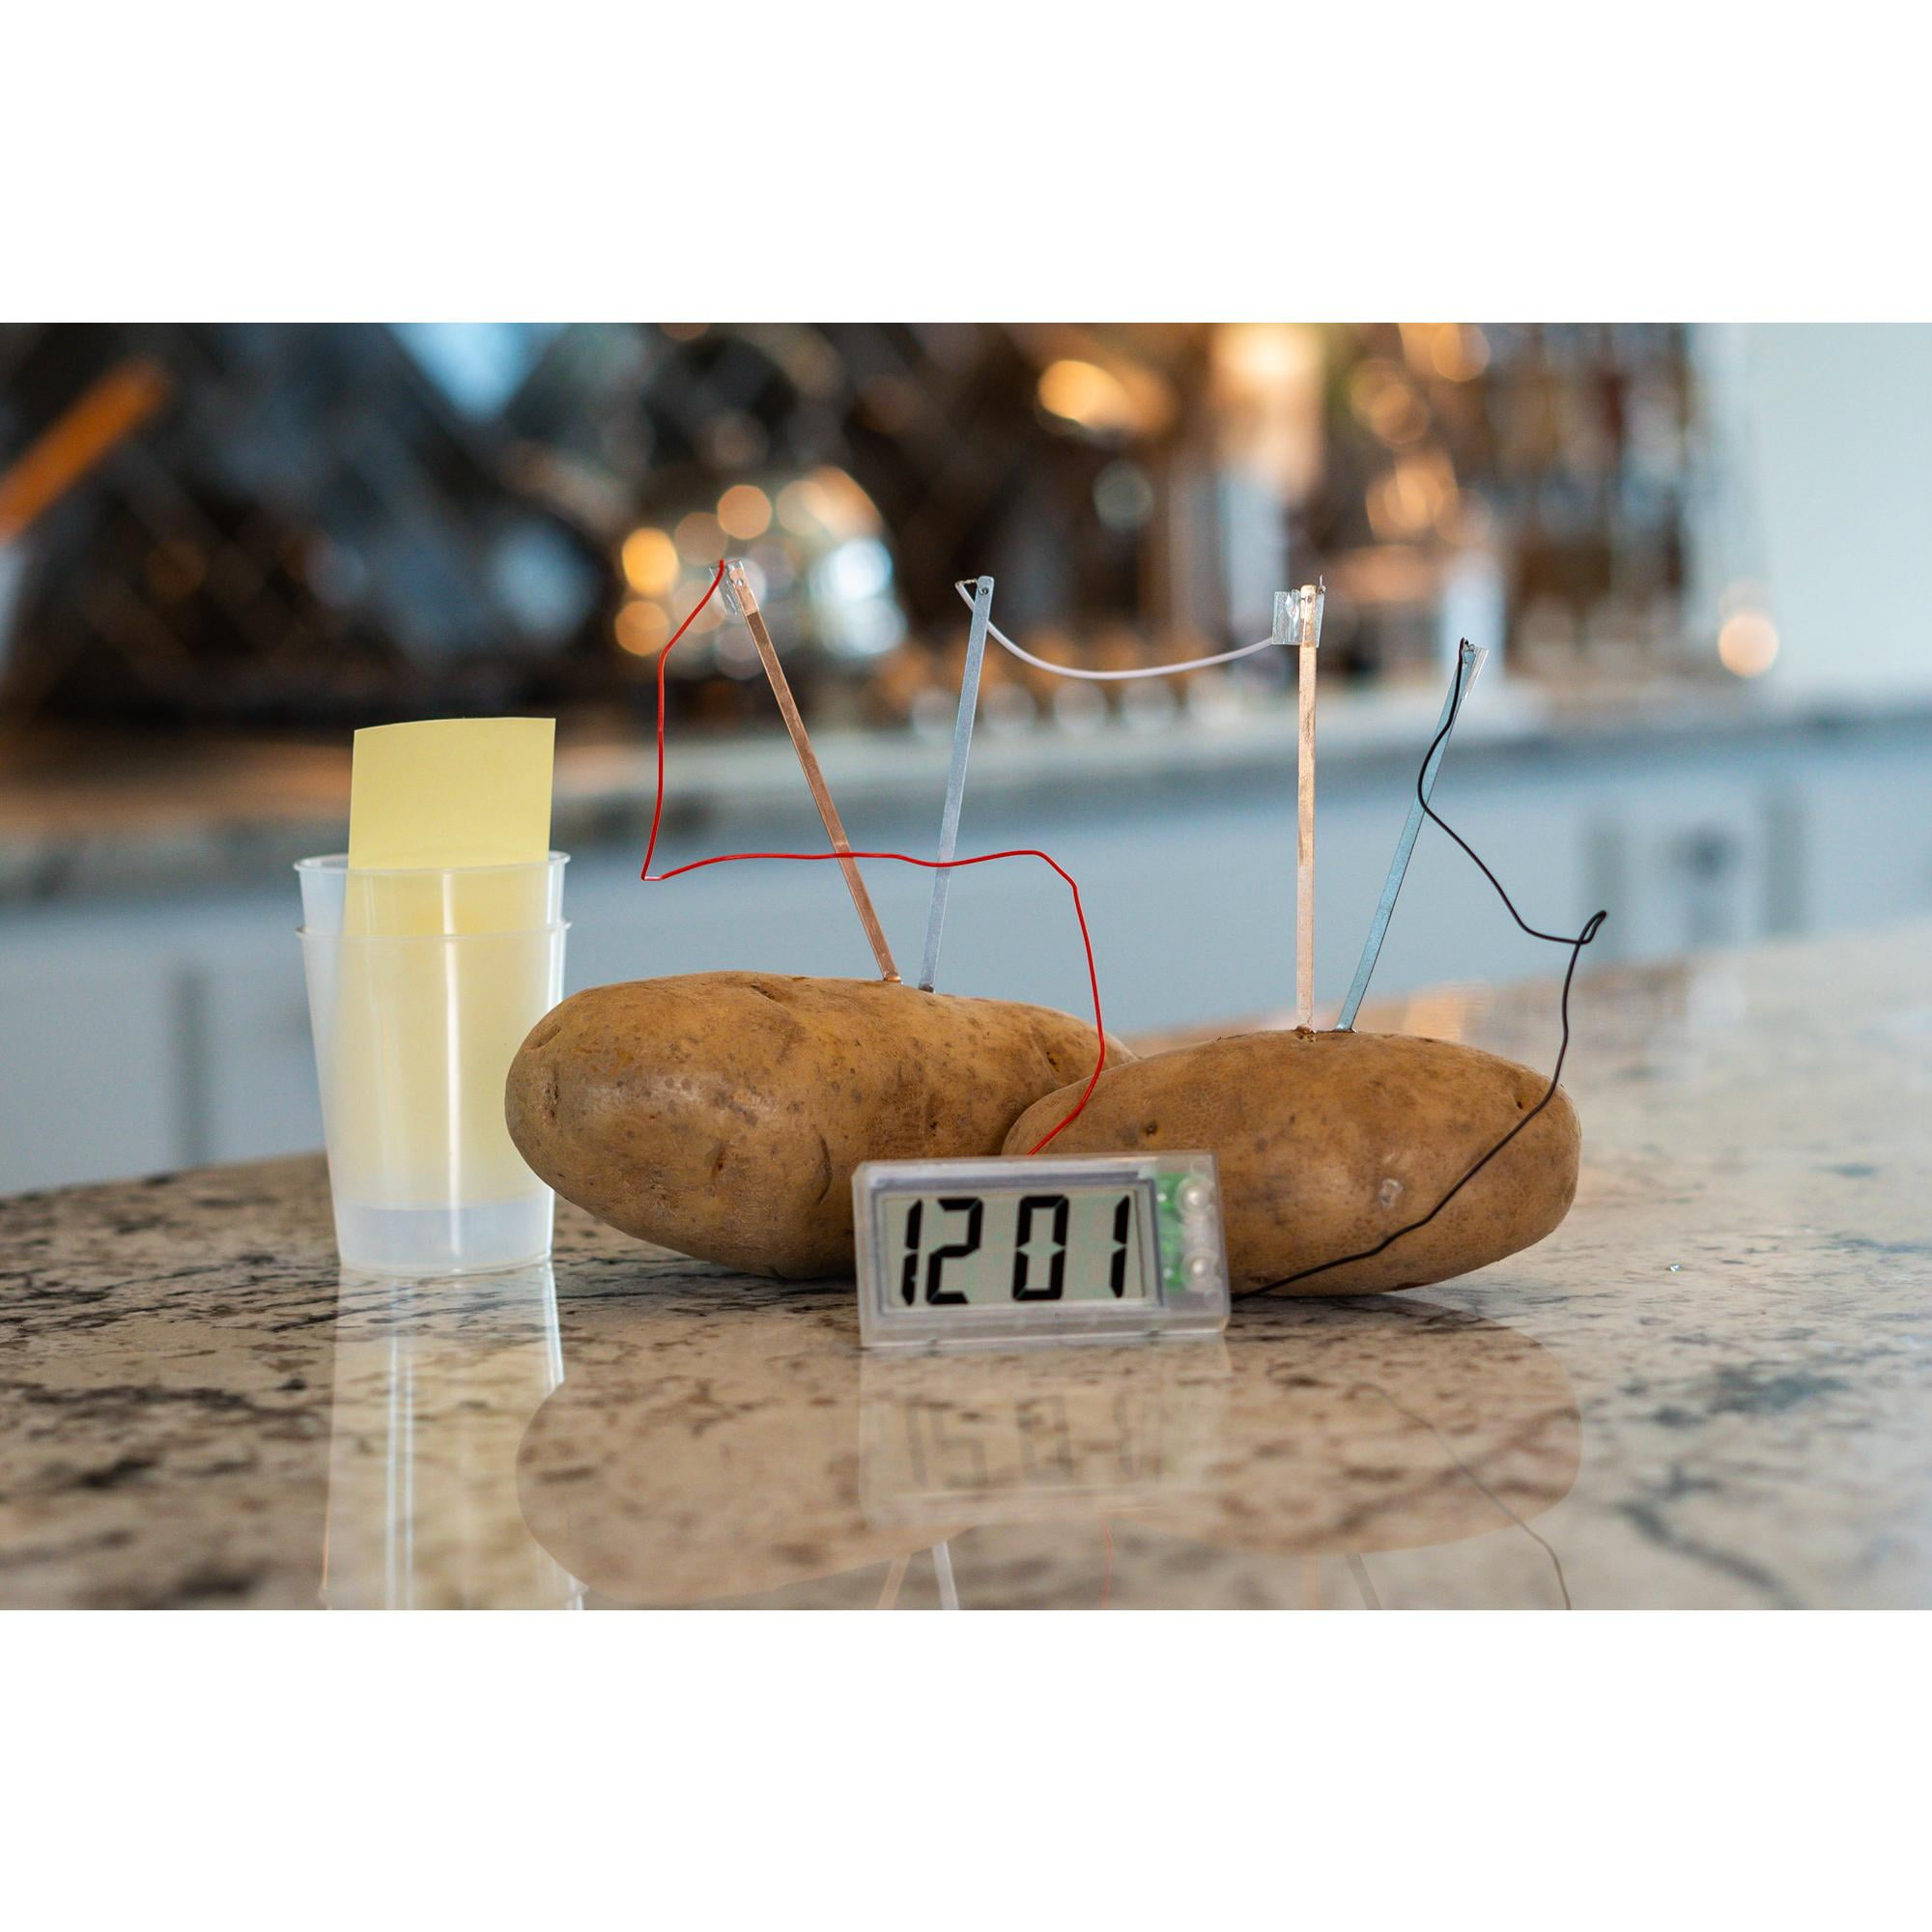 Potato Powered Digital Clock Scientific Educational Kids Novelty Toy Game 